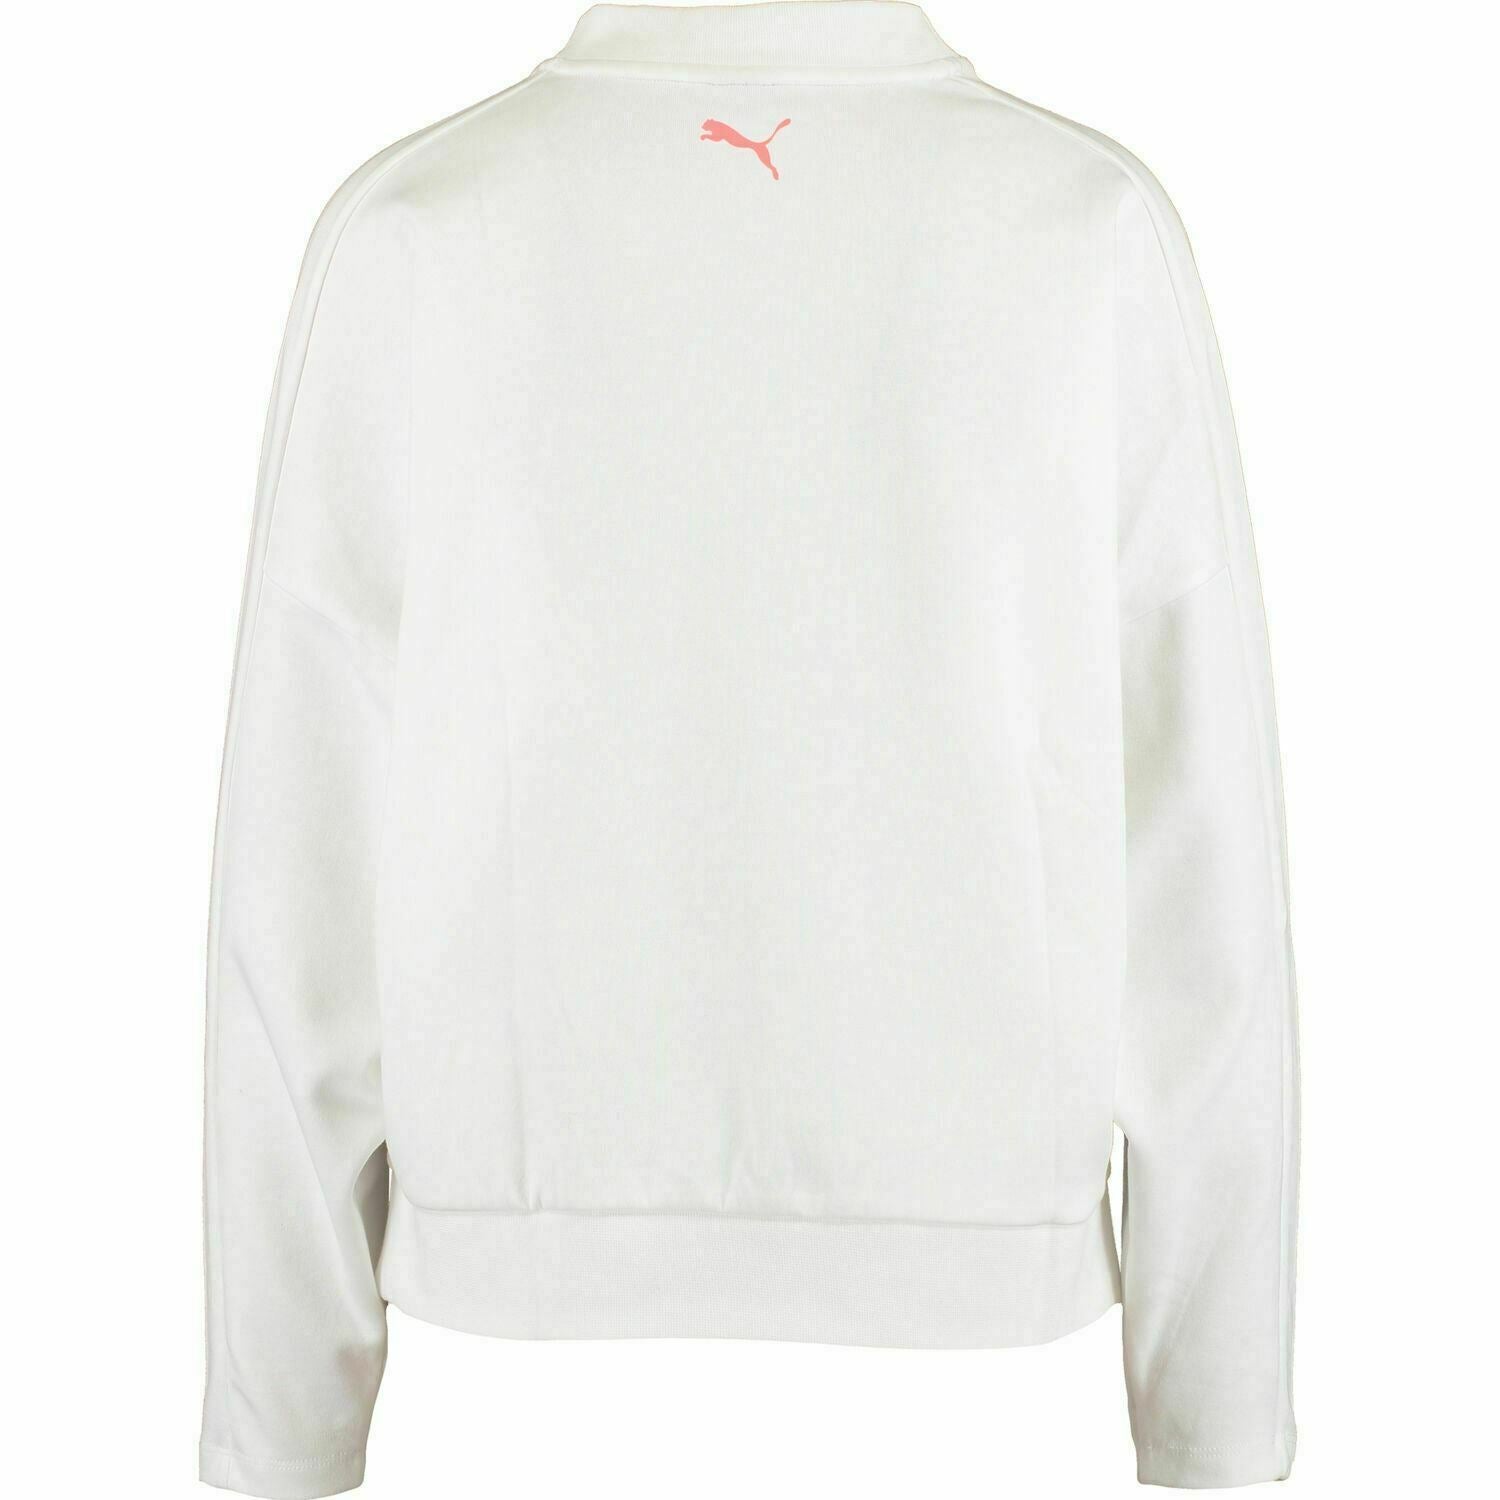 PUMA Women's EVIDA Crew Sweatshirt, White/Neon Logo, size L